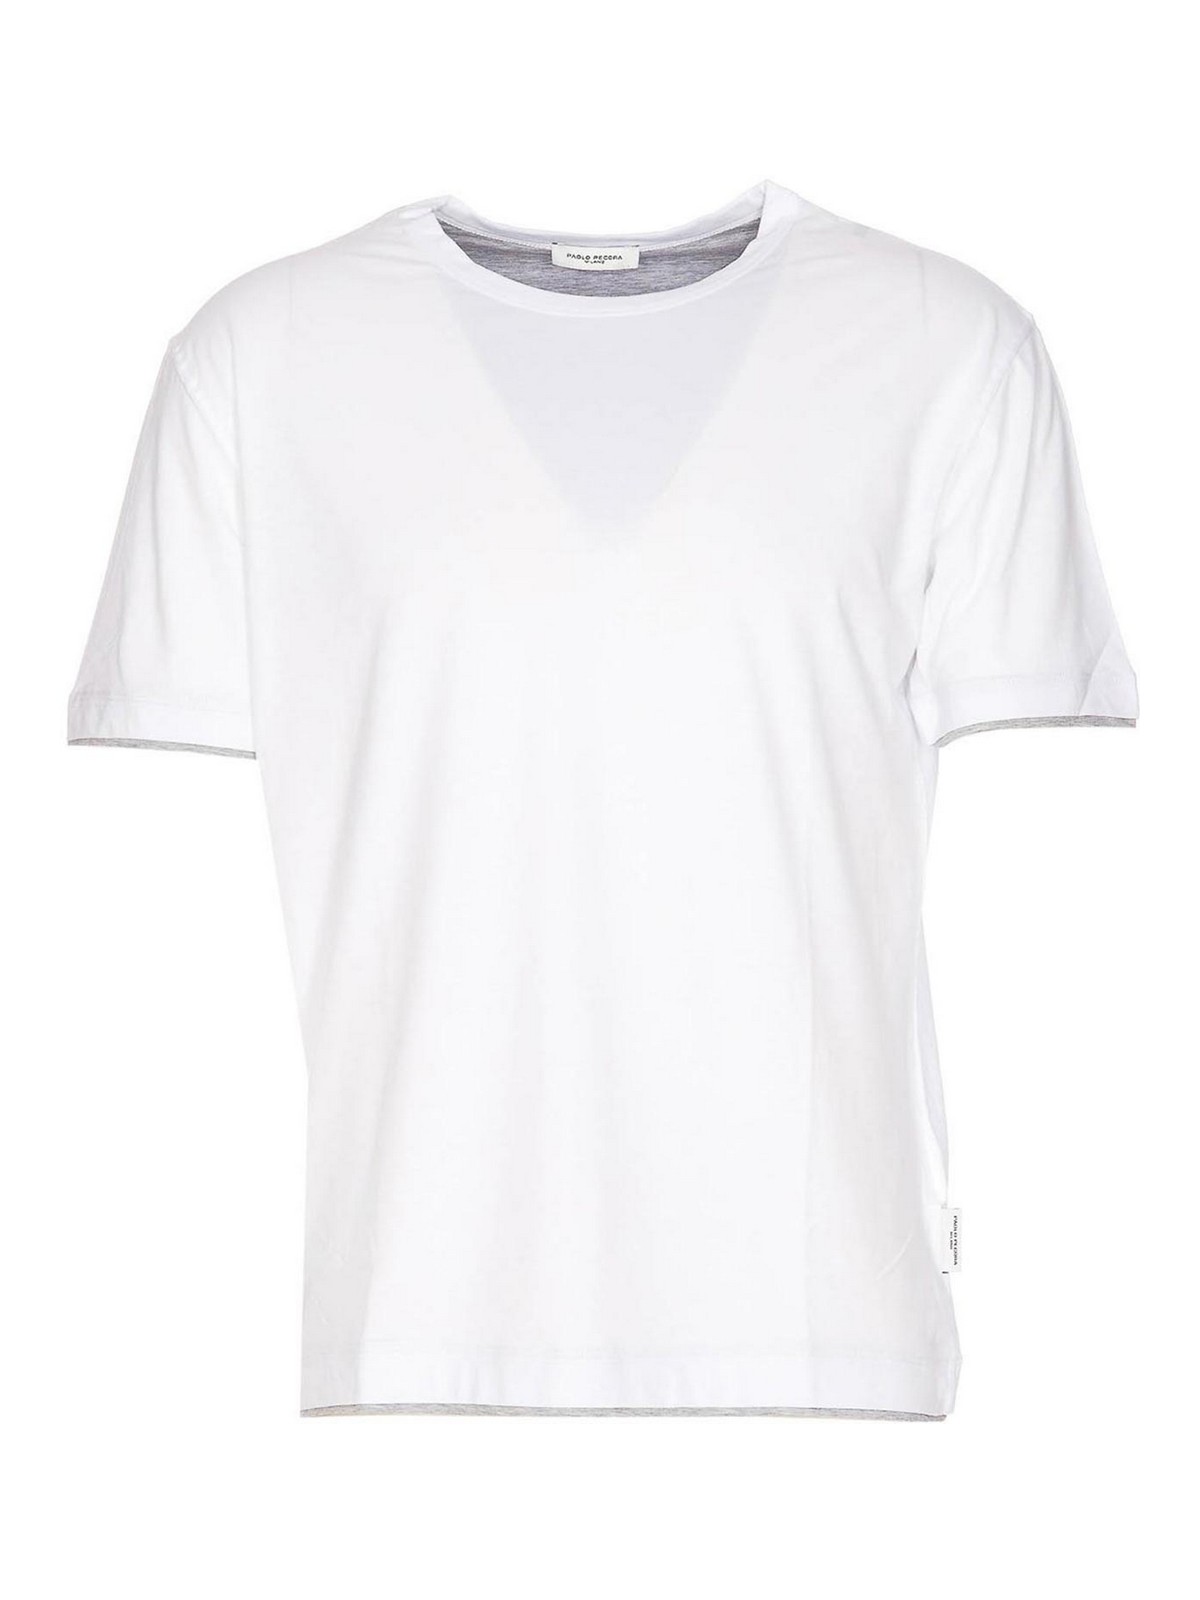 Paolo Pecora White T-shirt